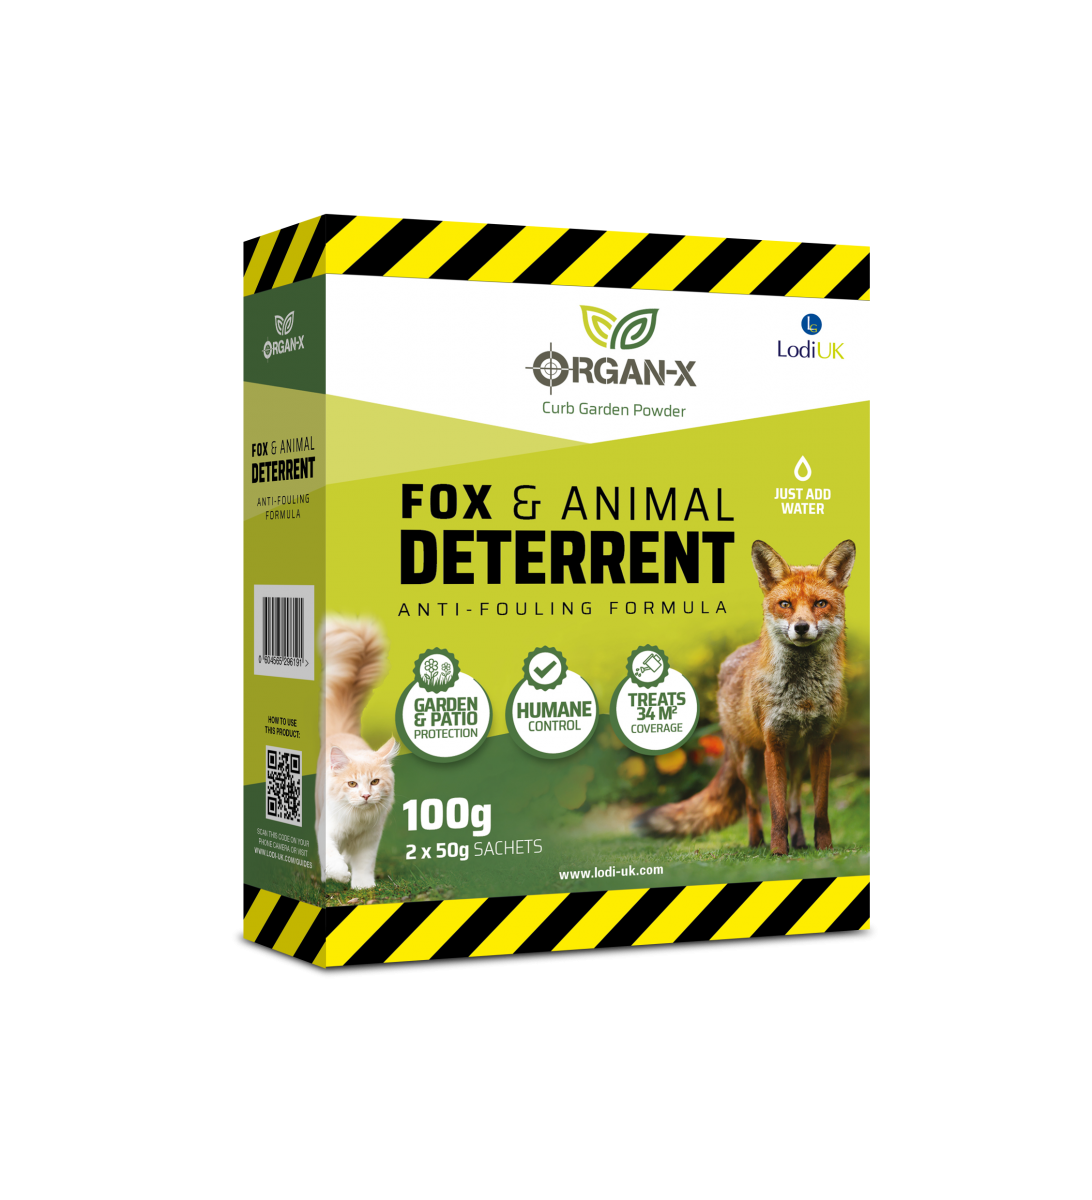 Organ-X Fox & Animal Deterrent